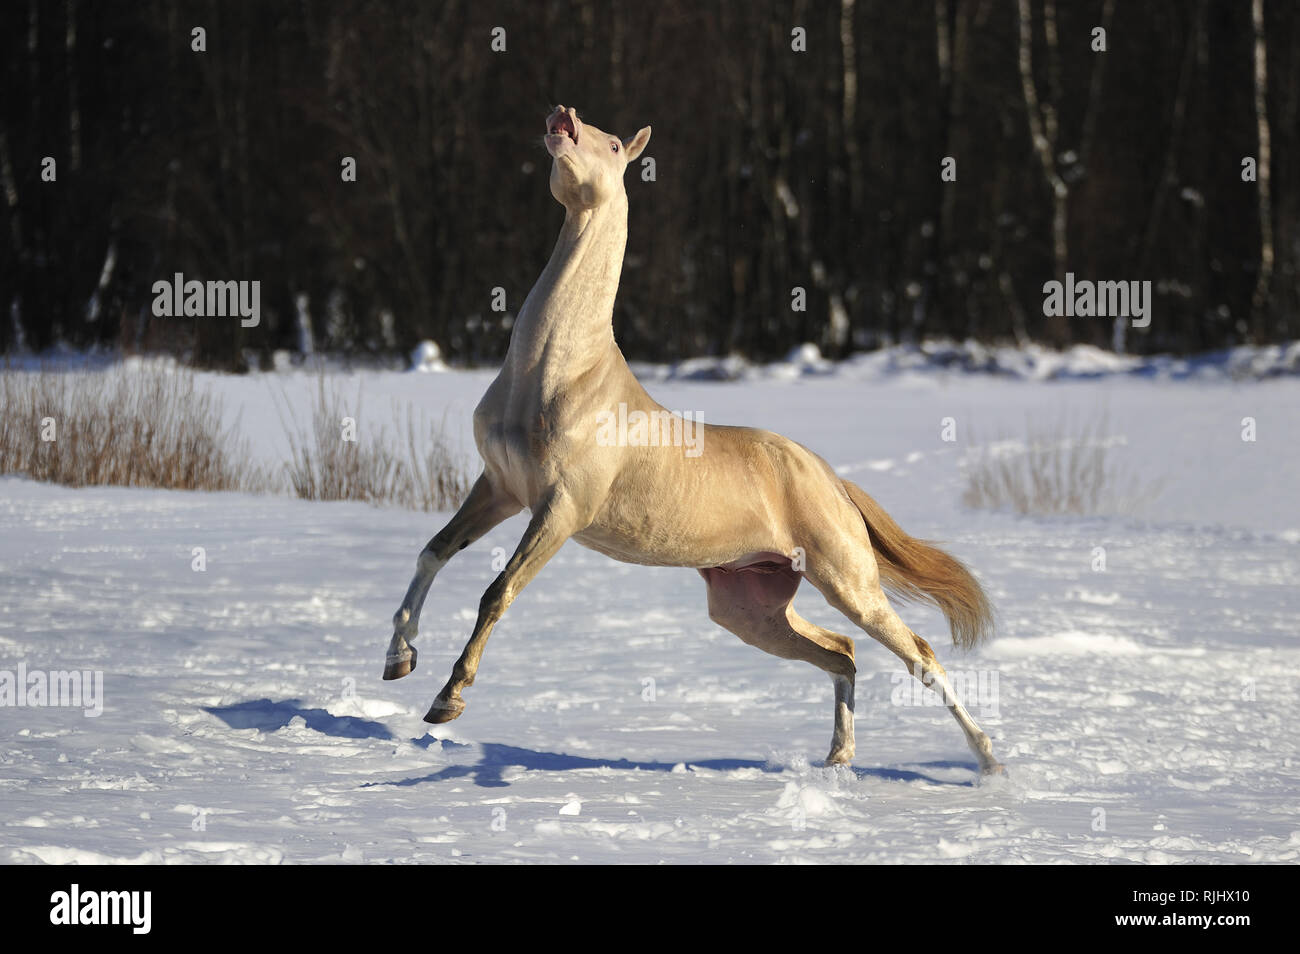 Cremello Akhal Teke stallion playing in the snow and showing flehmen response. Horizontal, side view, in motion, Stock Photo